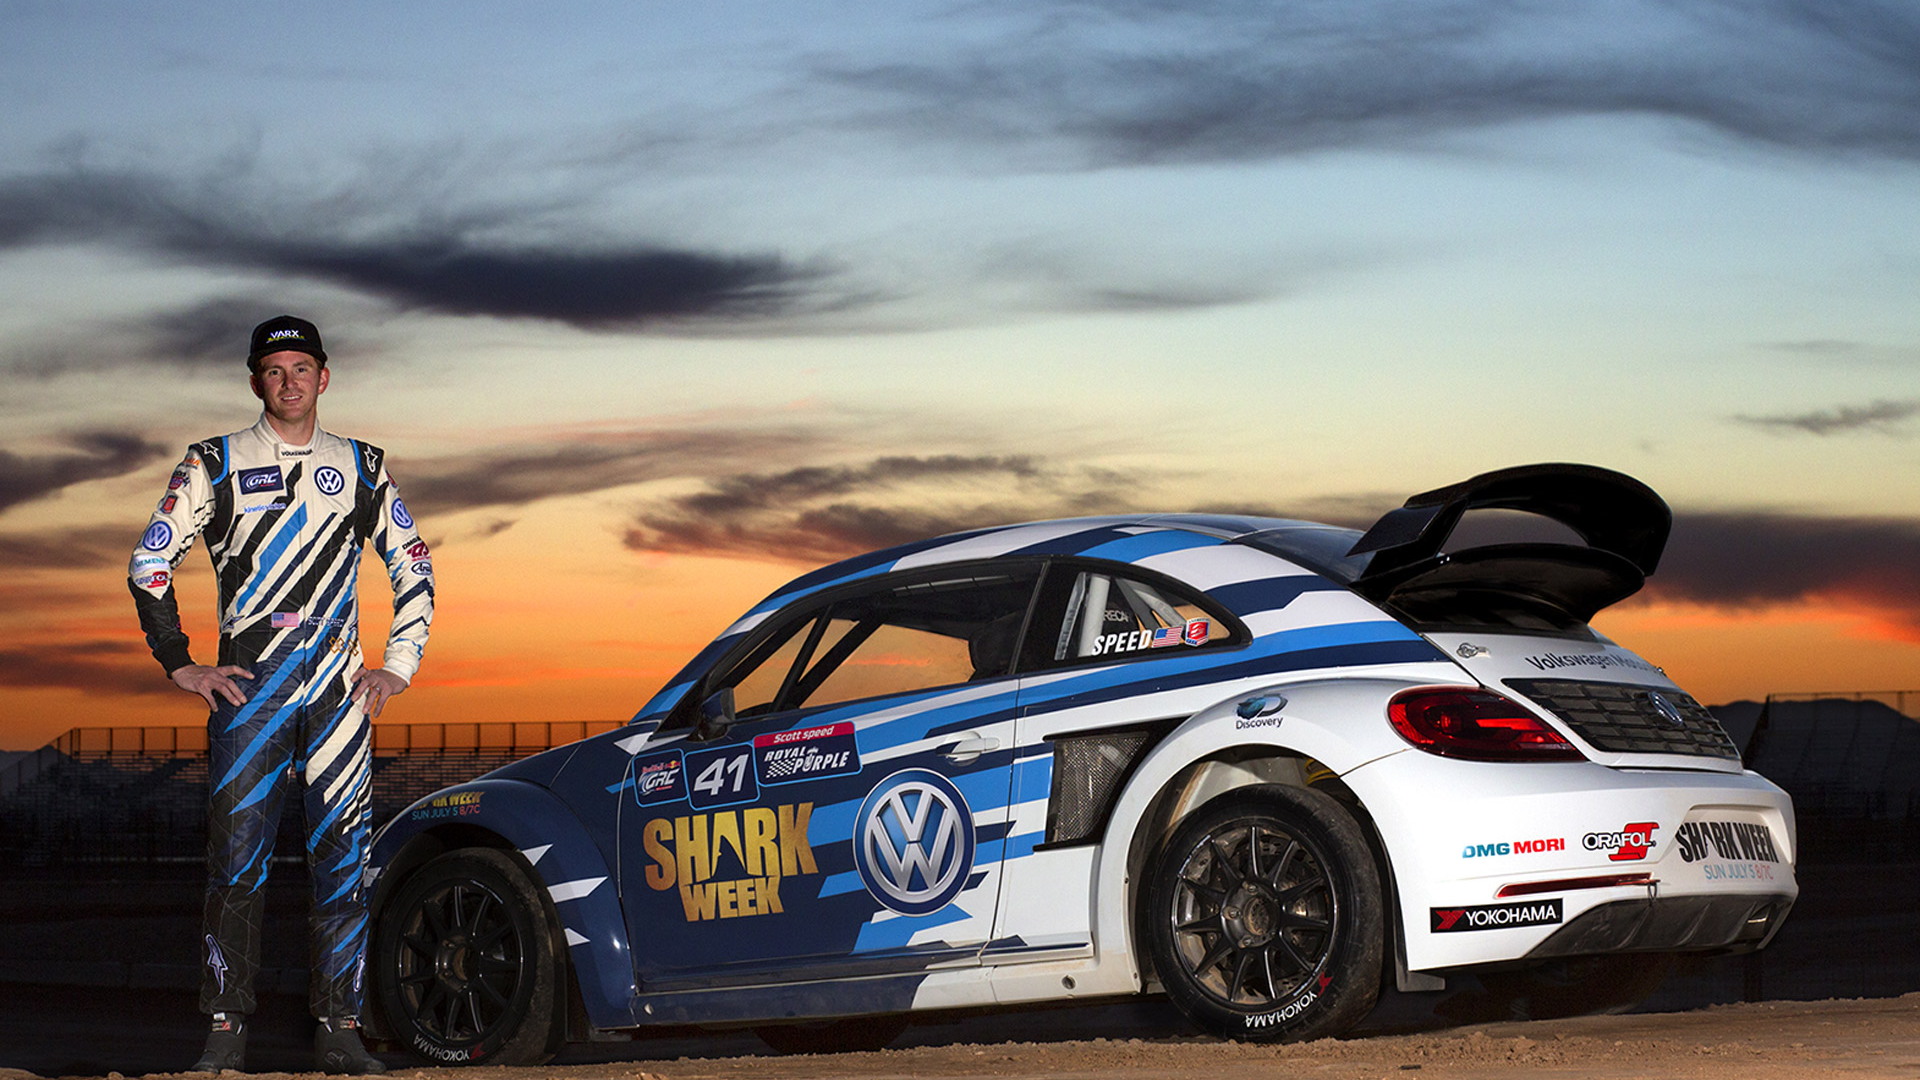 Scott Speed and his Shark Week-themed 2015 Volkswagen Beetle Global Rallycross Championship car